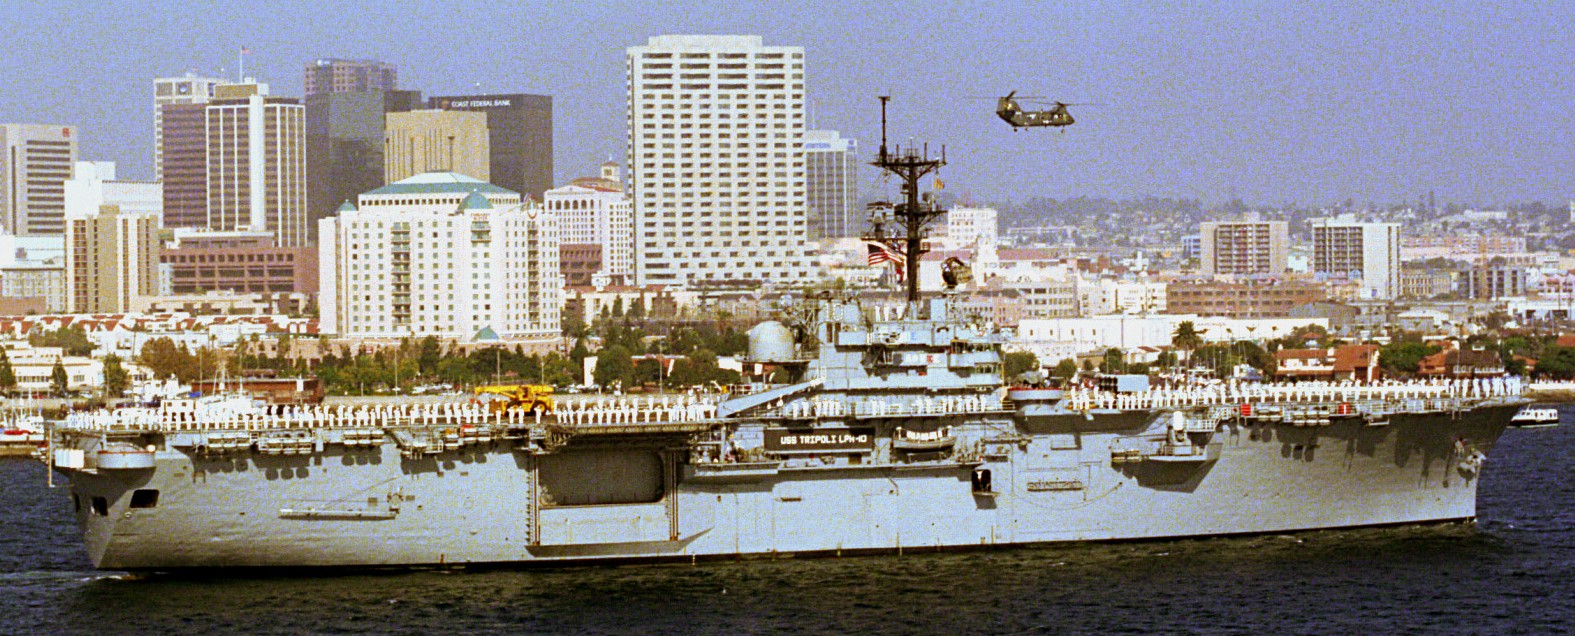 lph-10 uss tripoli iwo jima class amphibious assault ship landing platform helicopter us navy 13